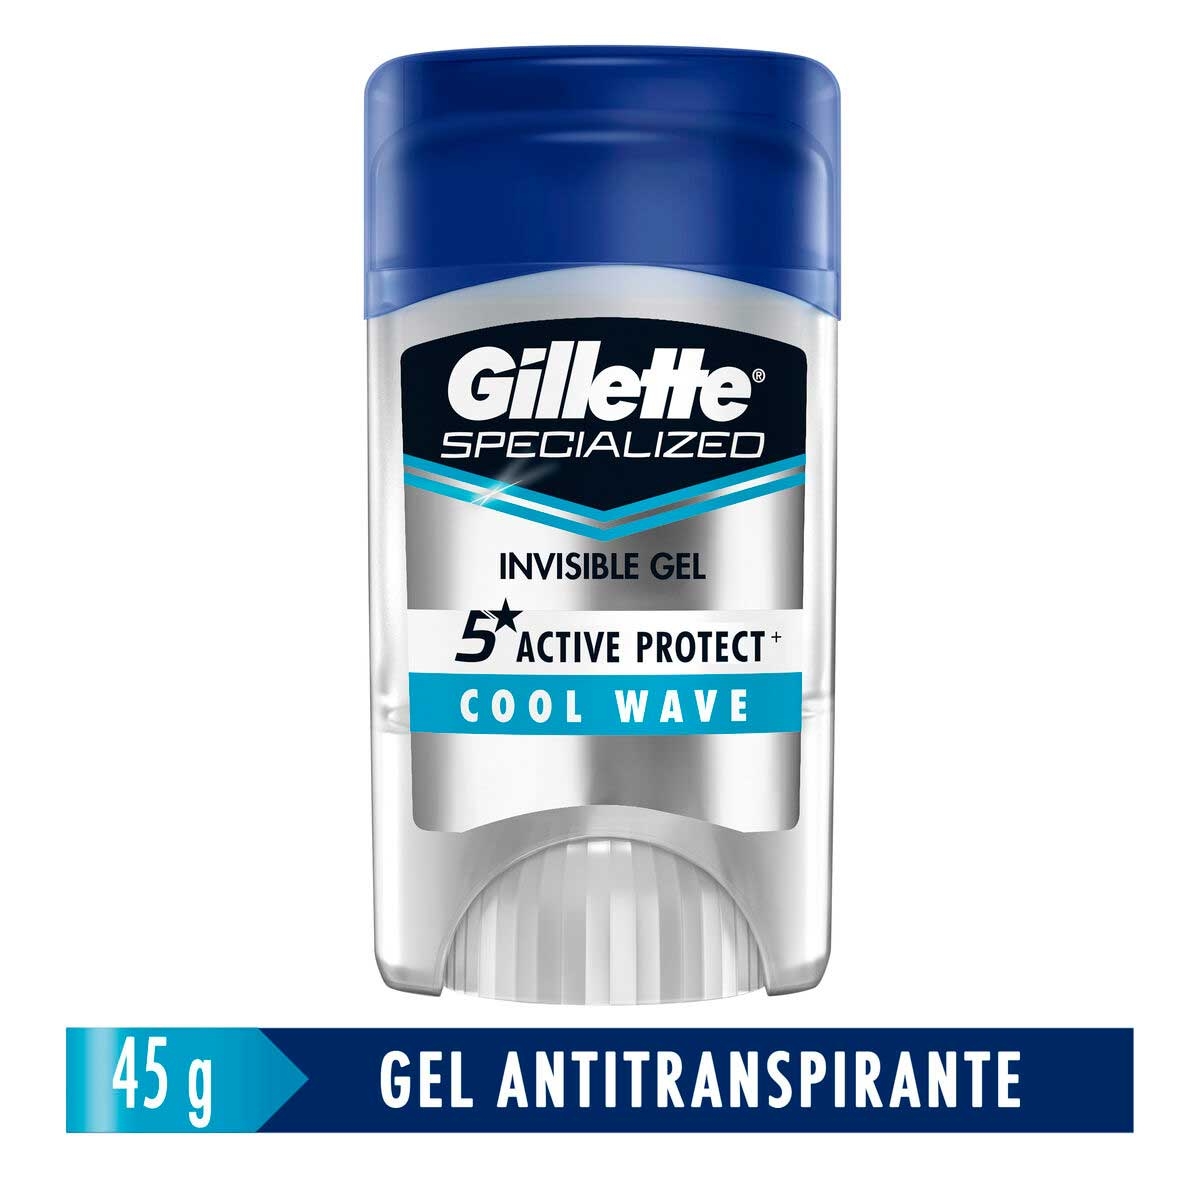 Gel Antitranspirante Gillette Clinical Pressure Defense 45 g, Productos